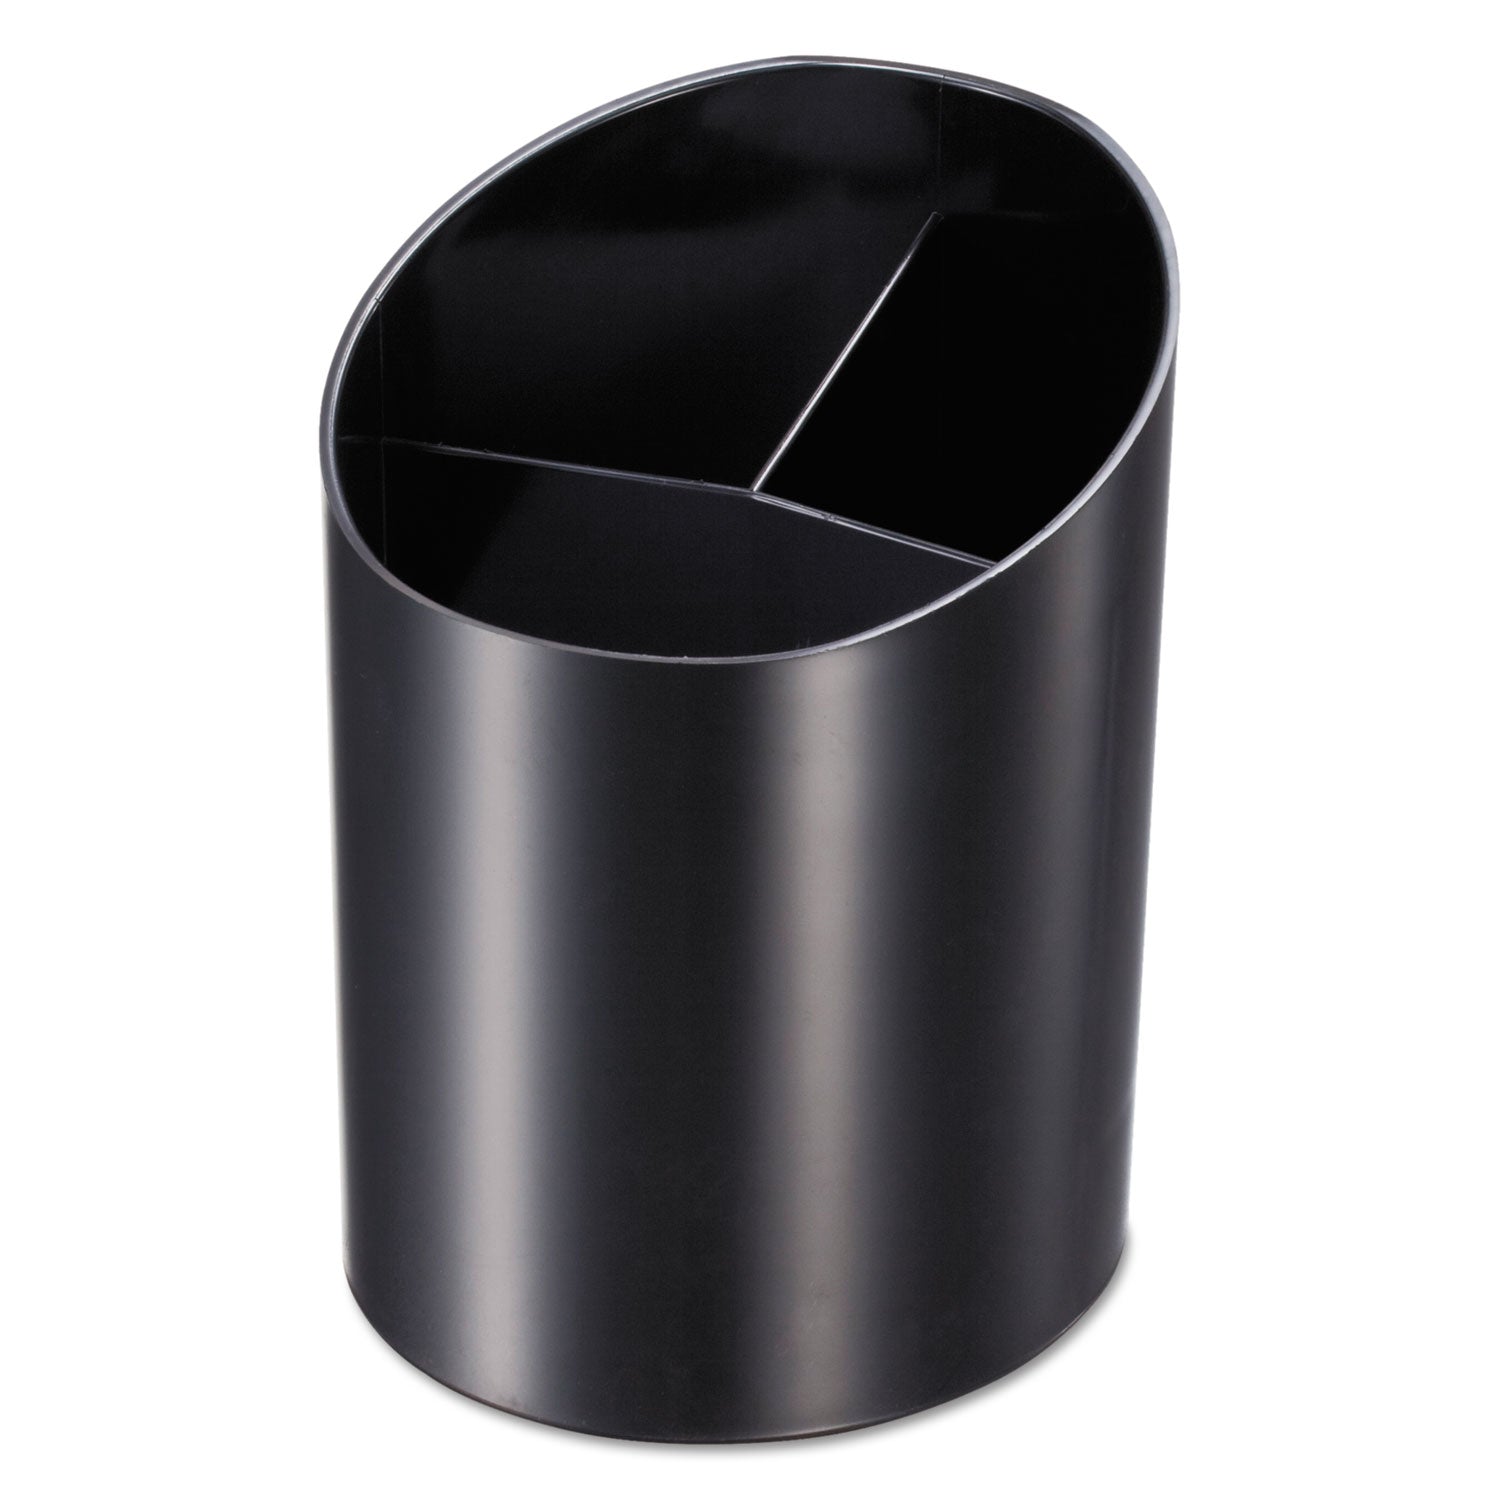 Recycled Big Pencil Cup, Plastic, 4.25 x 4.5 x 5.75, Black - 